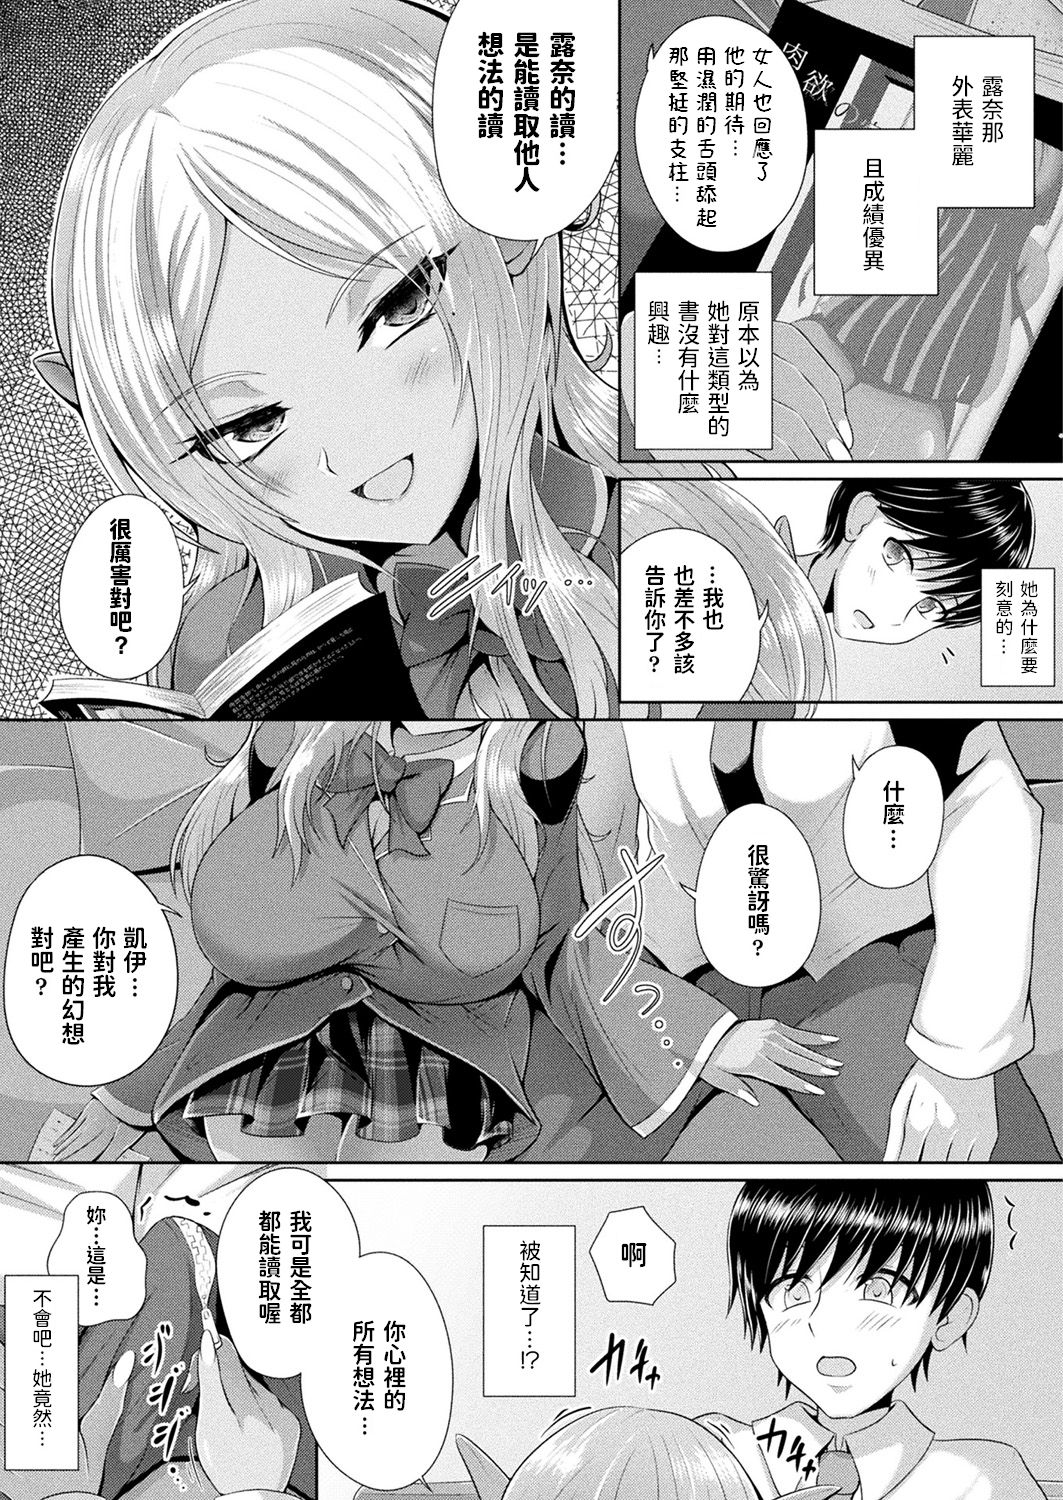 [Aokura] I read you... (Comic Unreal Plus Vol. 4) [Chinese] [Aokura] I read you... (コミックアンリアルぷらす Vol.4) [中国翻訳]